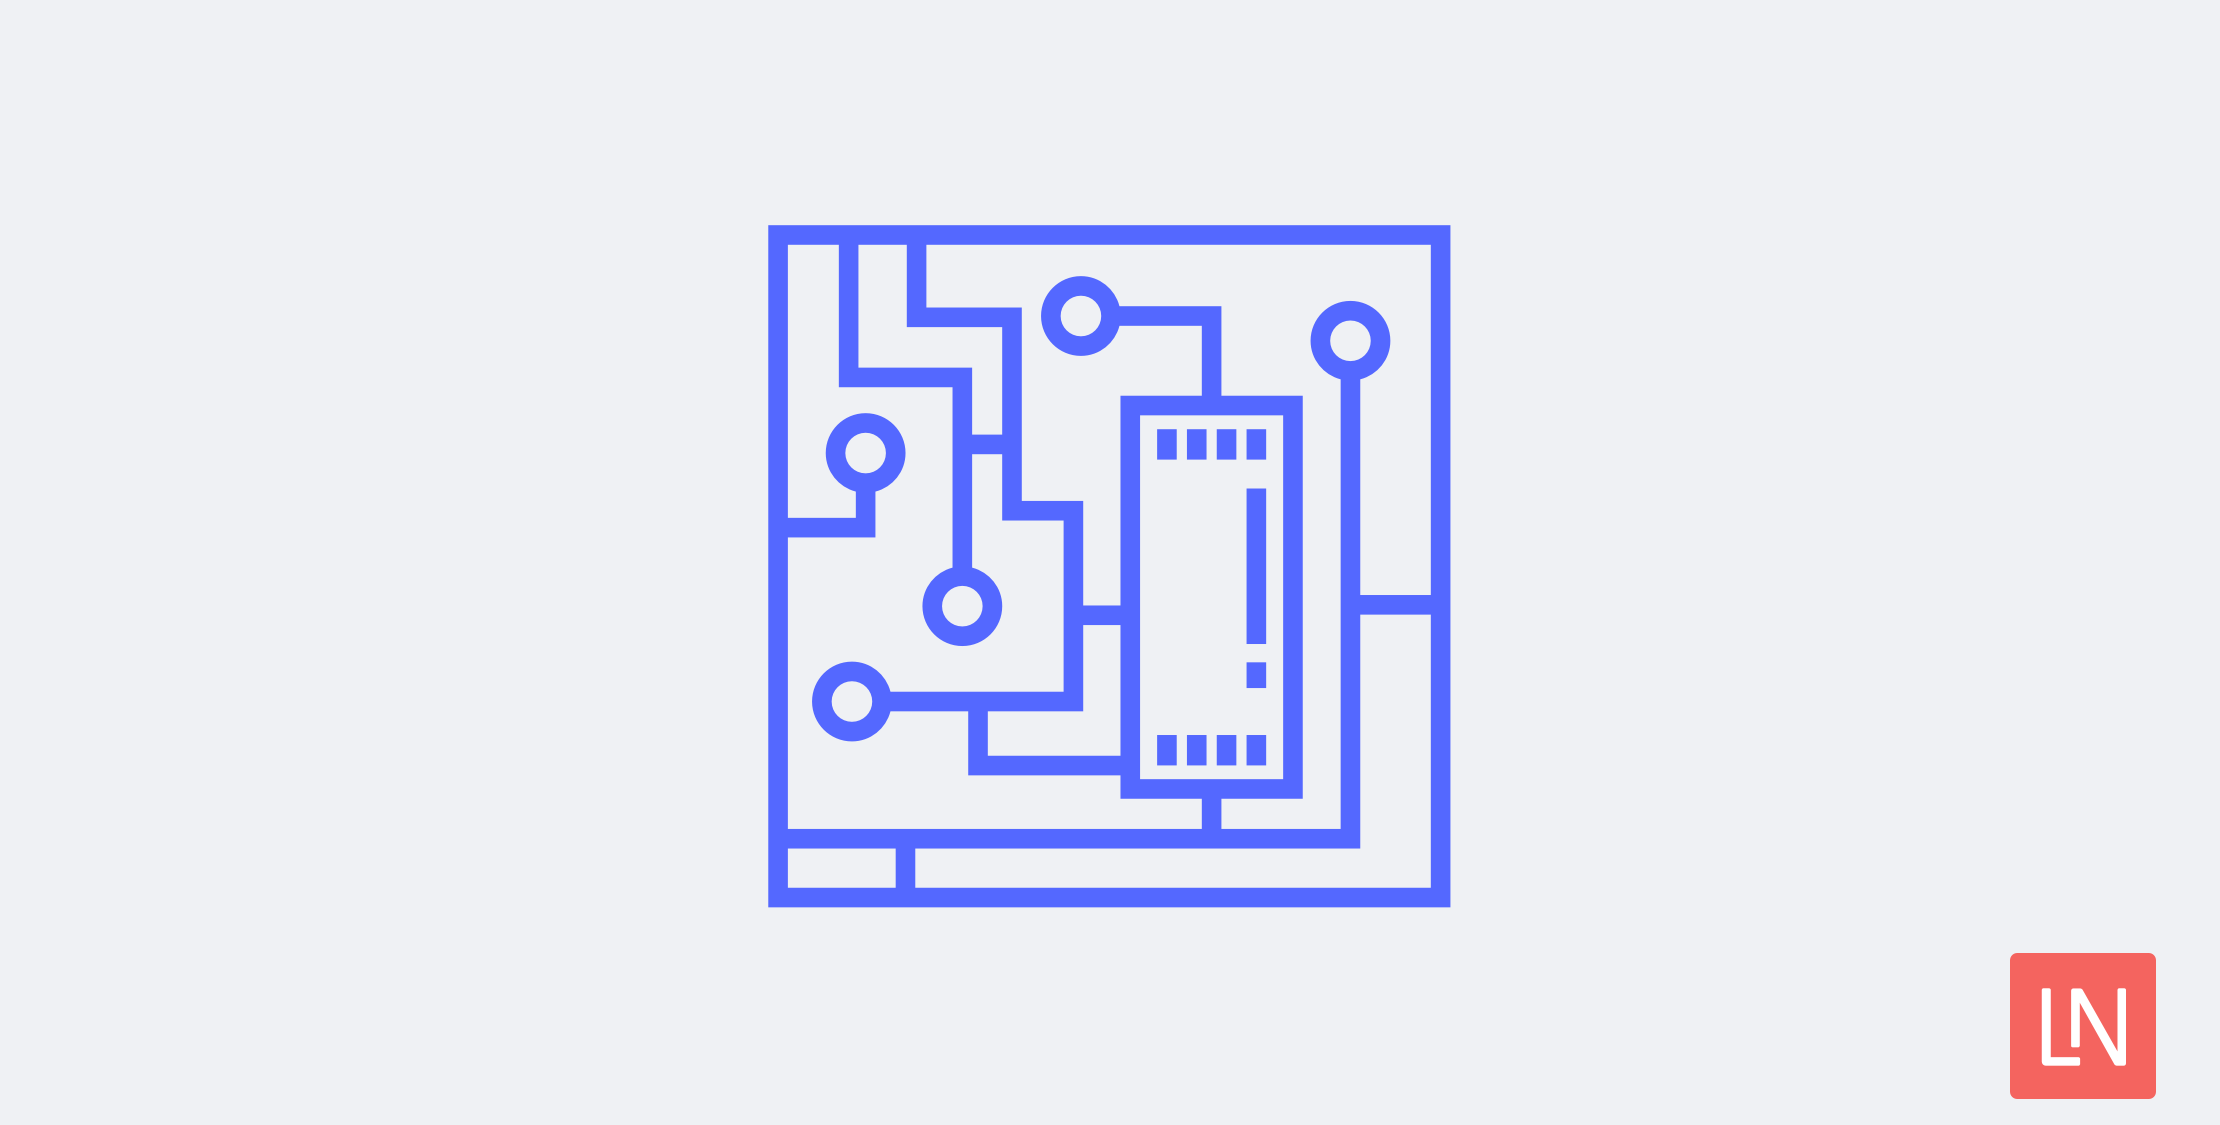 Circuit Breaker Pattern in PHP image